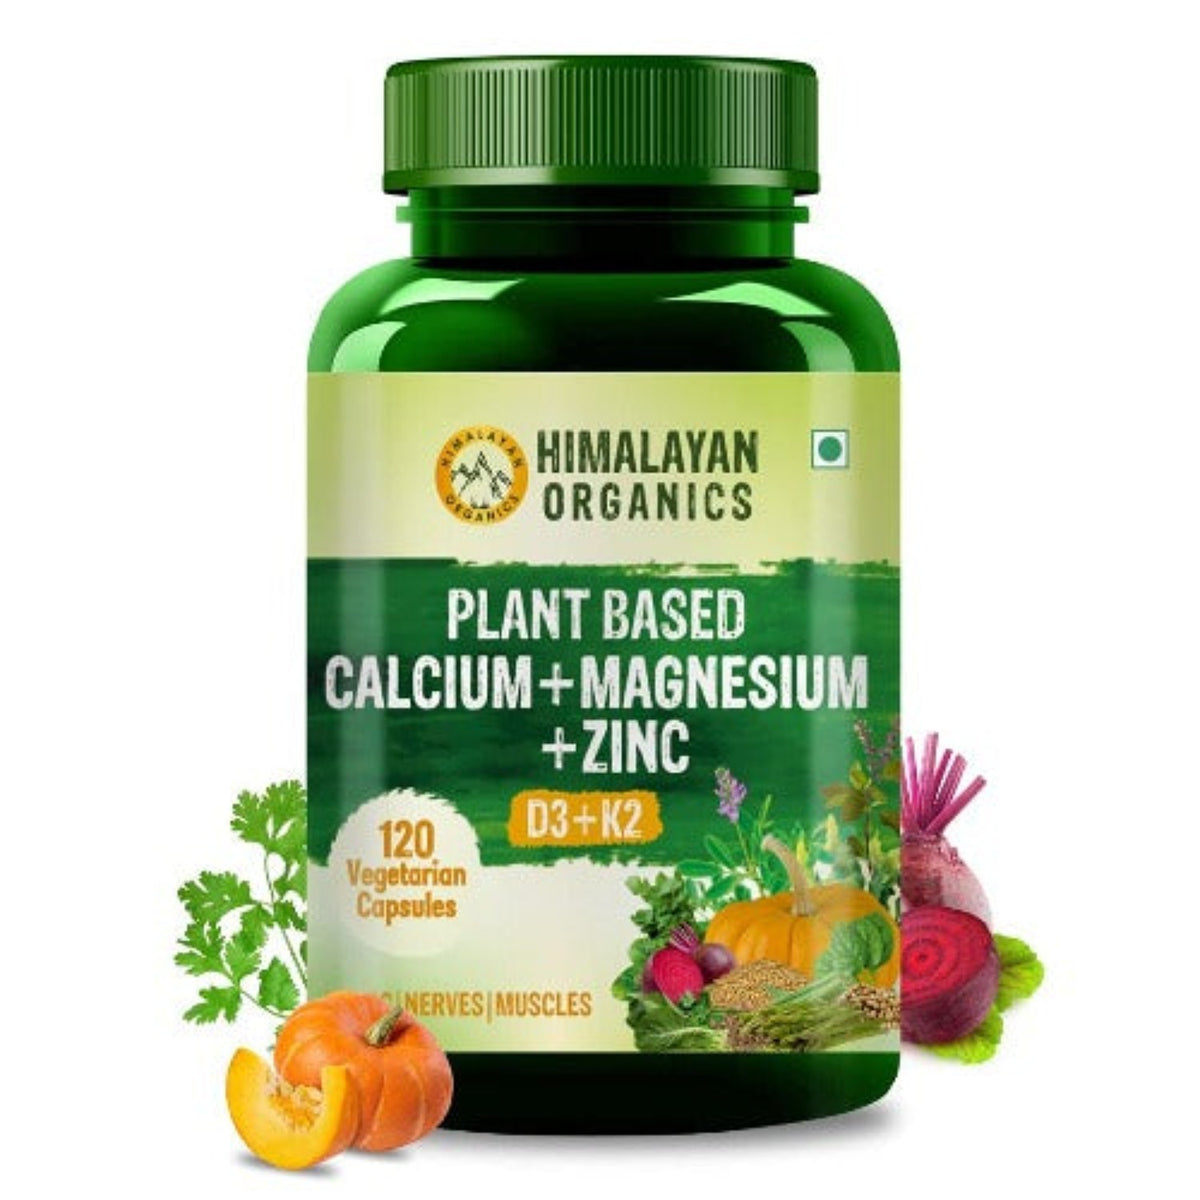 Himalayan Organics Plant Based Calcium Magnesium Zinc D3 + K2 Supplement 120 Vegetarian Capsules